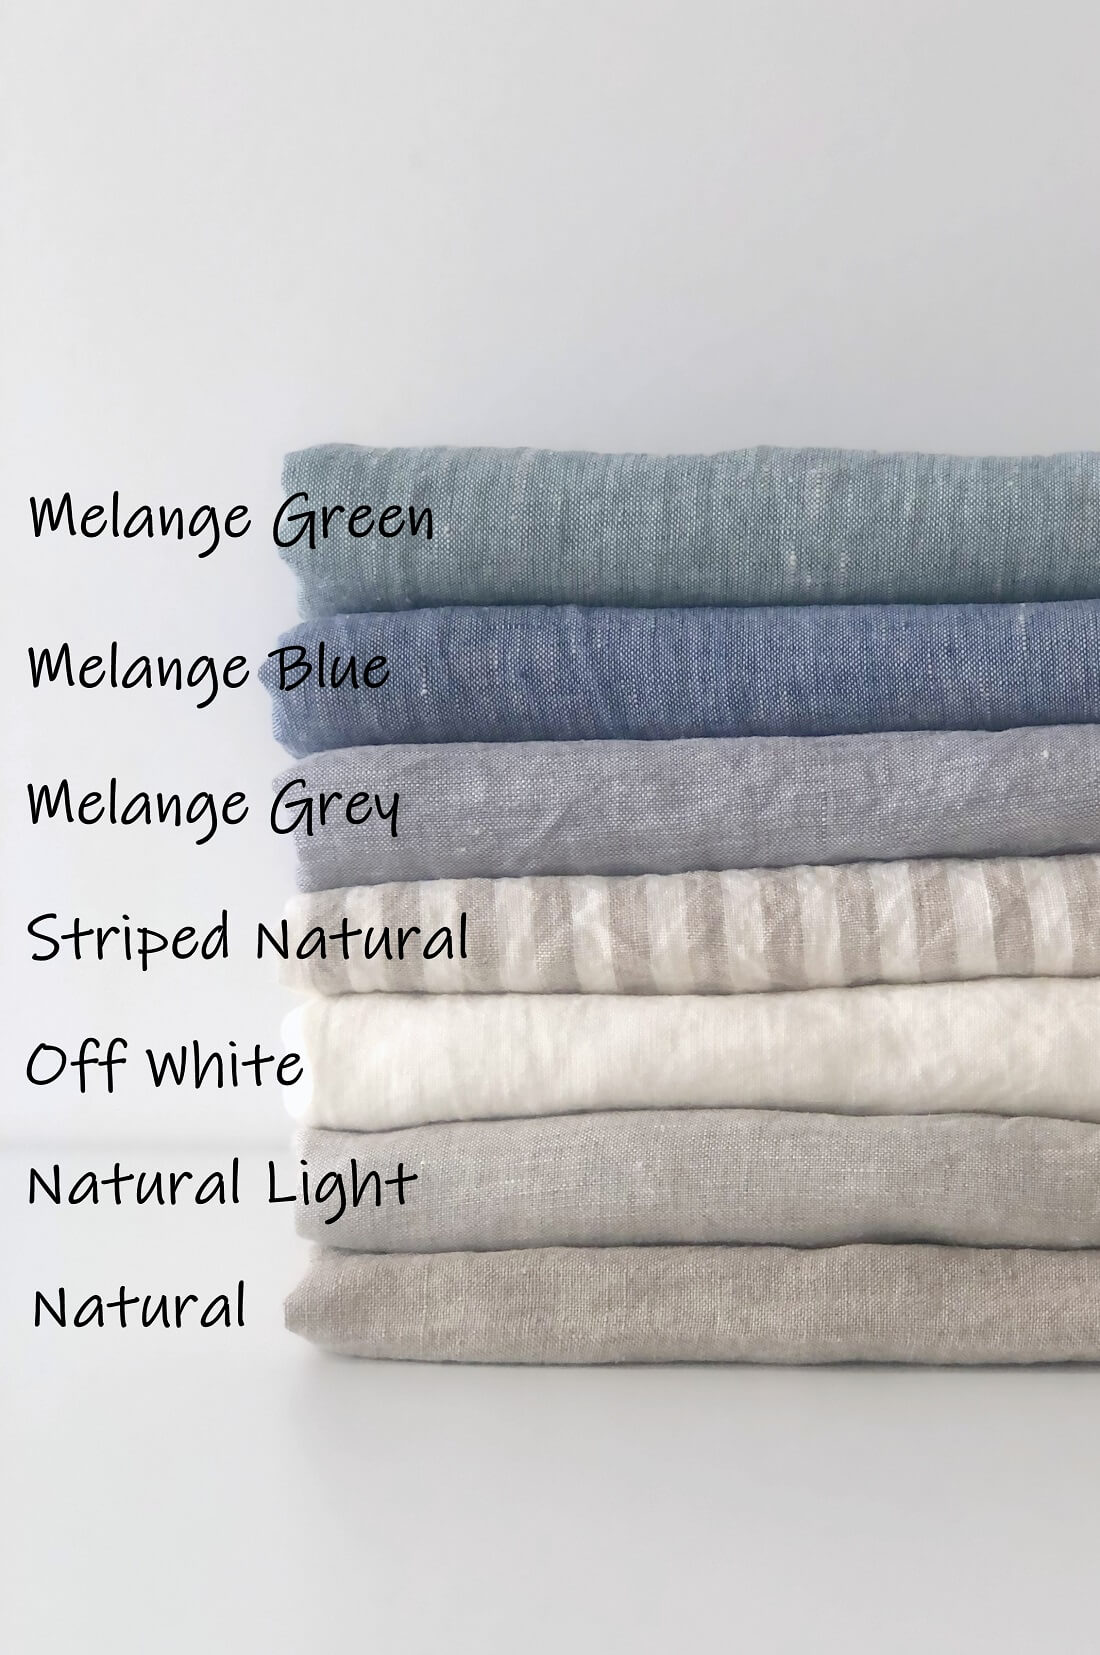 Linen flat sheet in Natural color